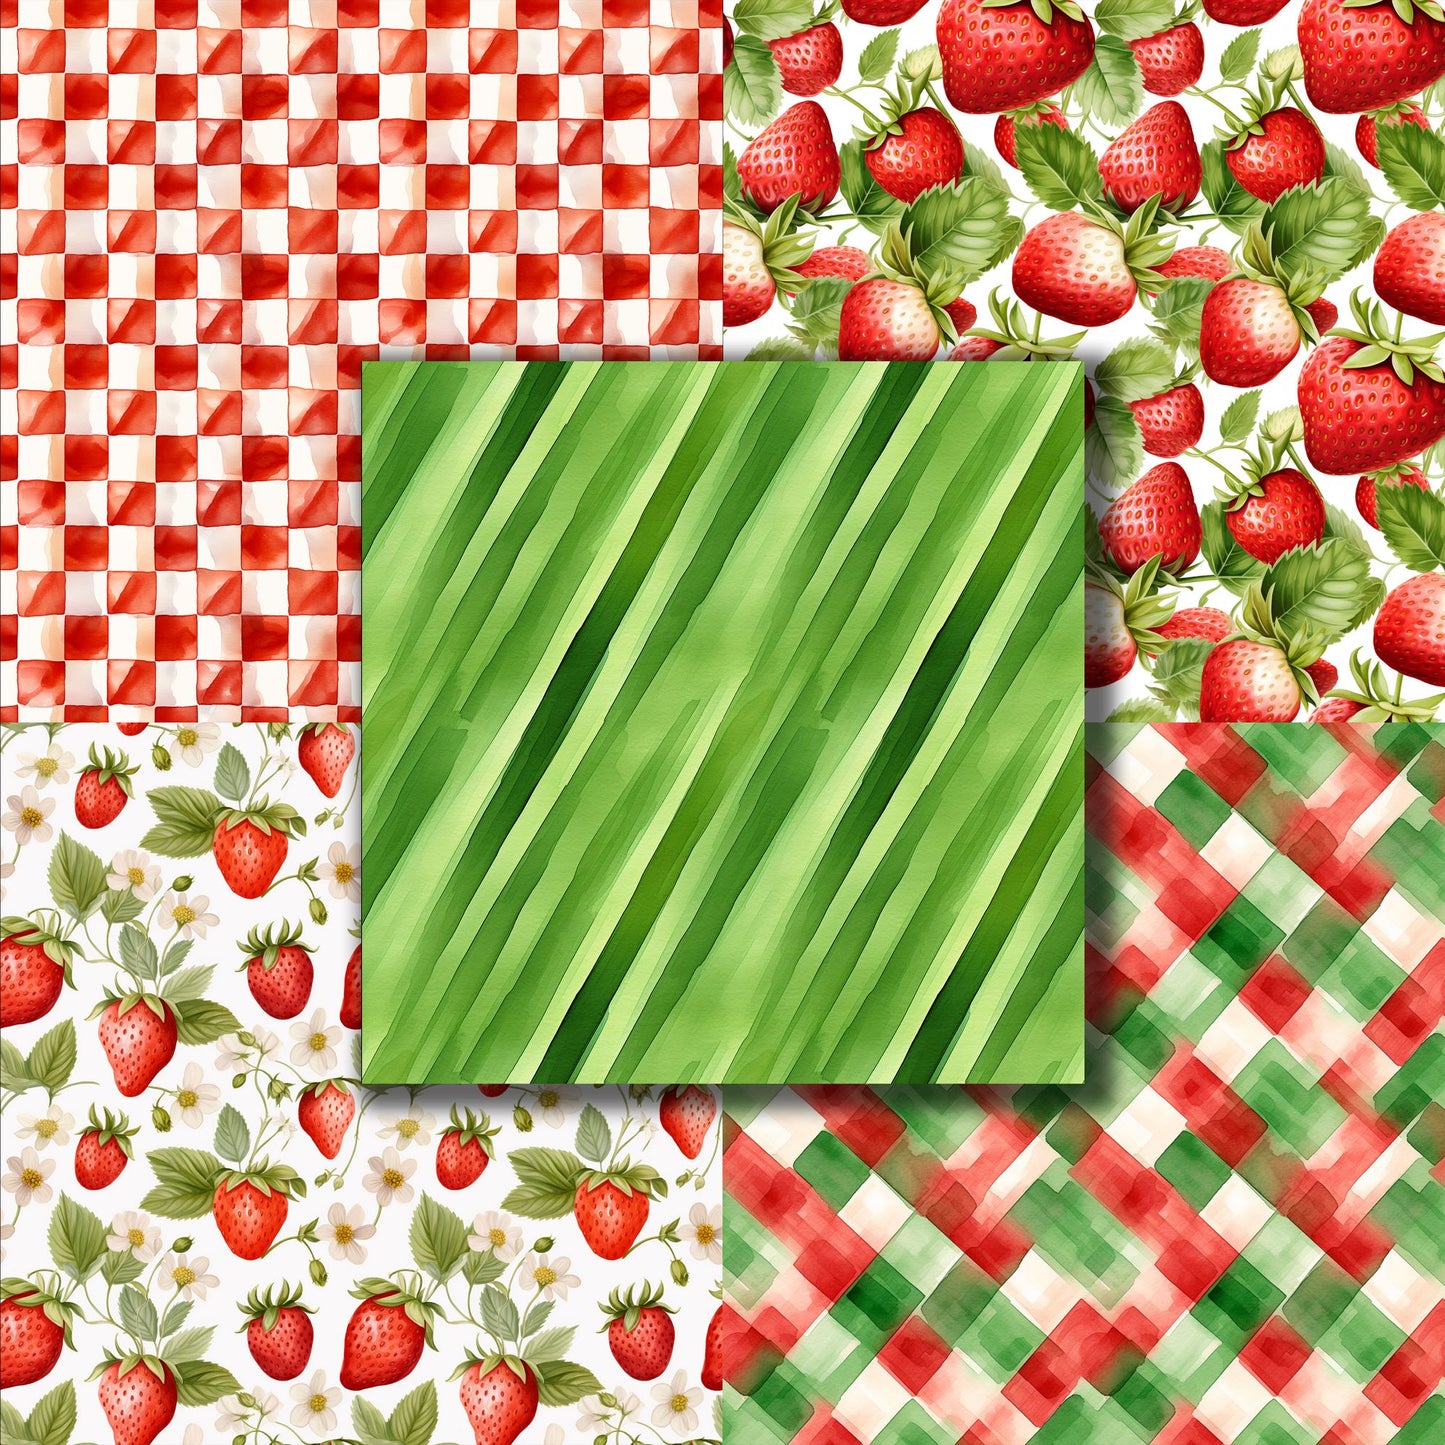 Strawberry Summer 12X12 Scrapbook Paper Pack - 8852